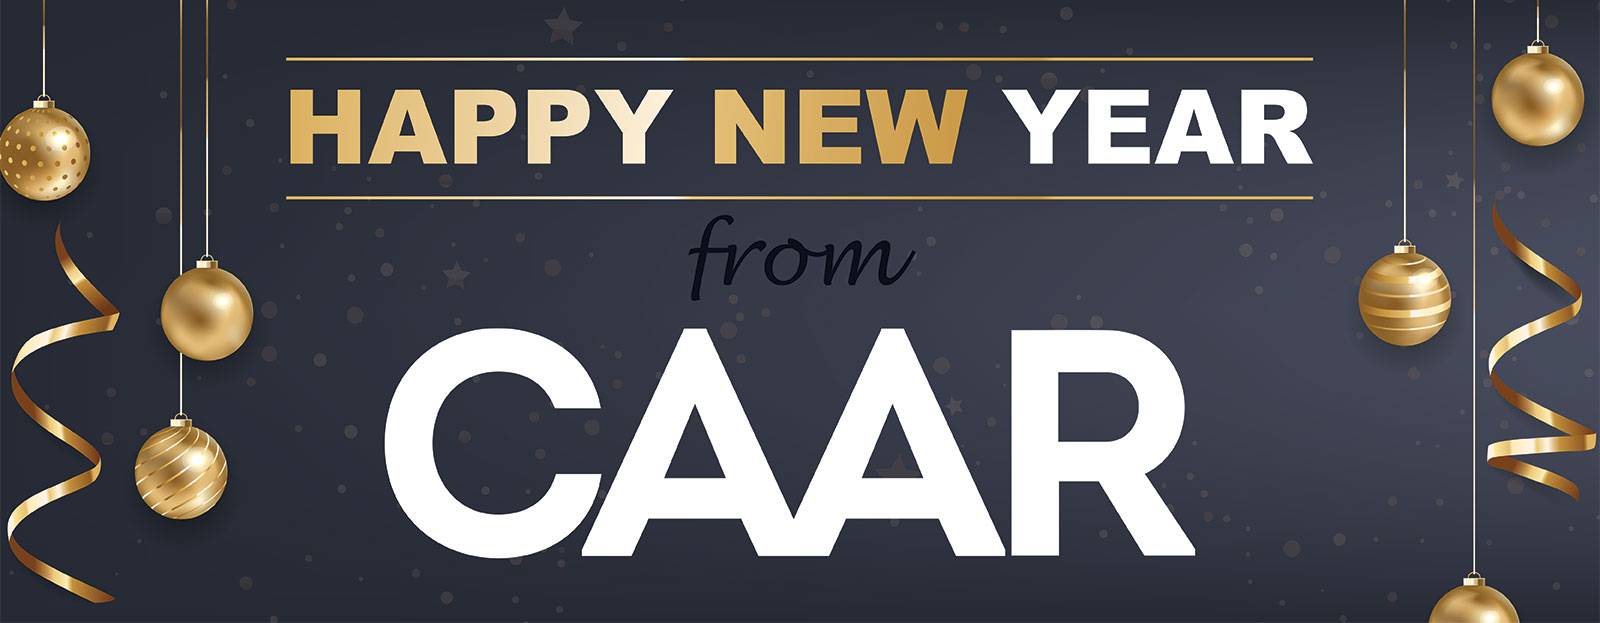 CAAR Happy New Year